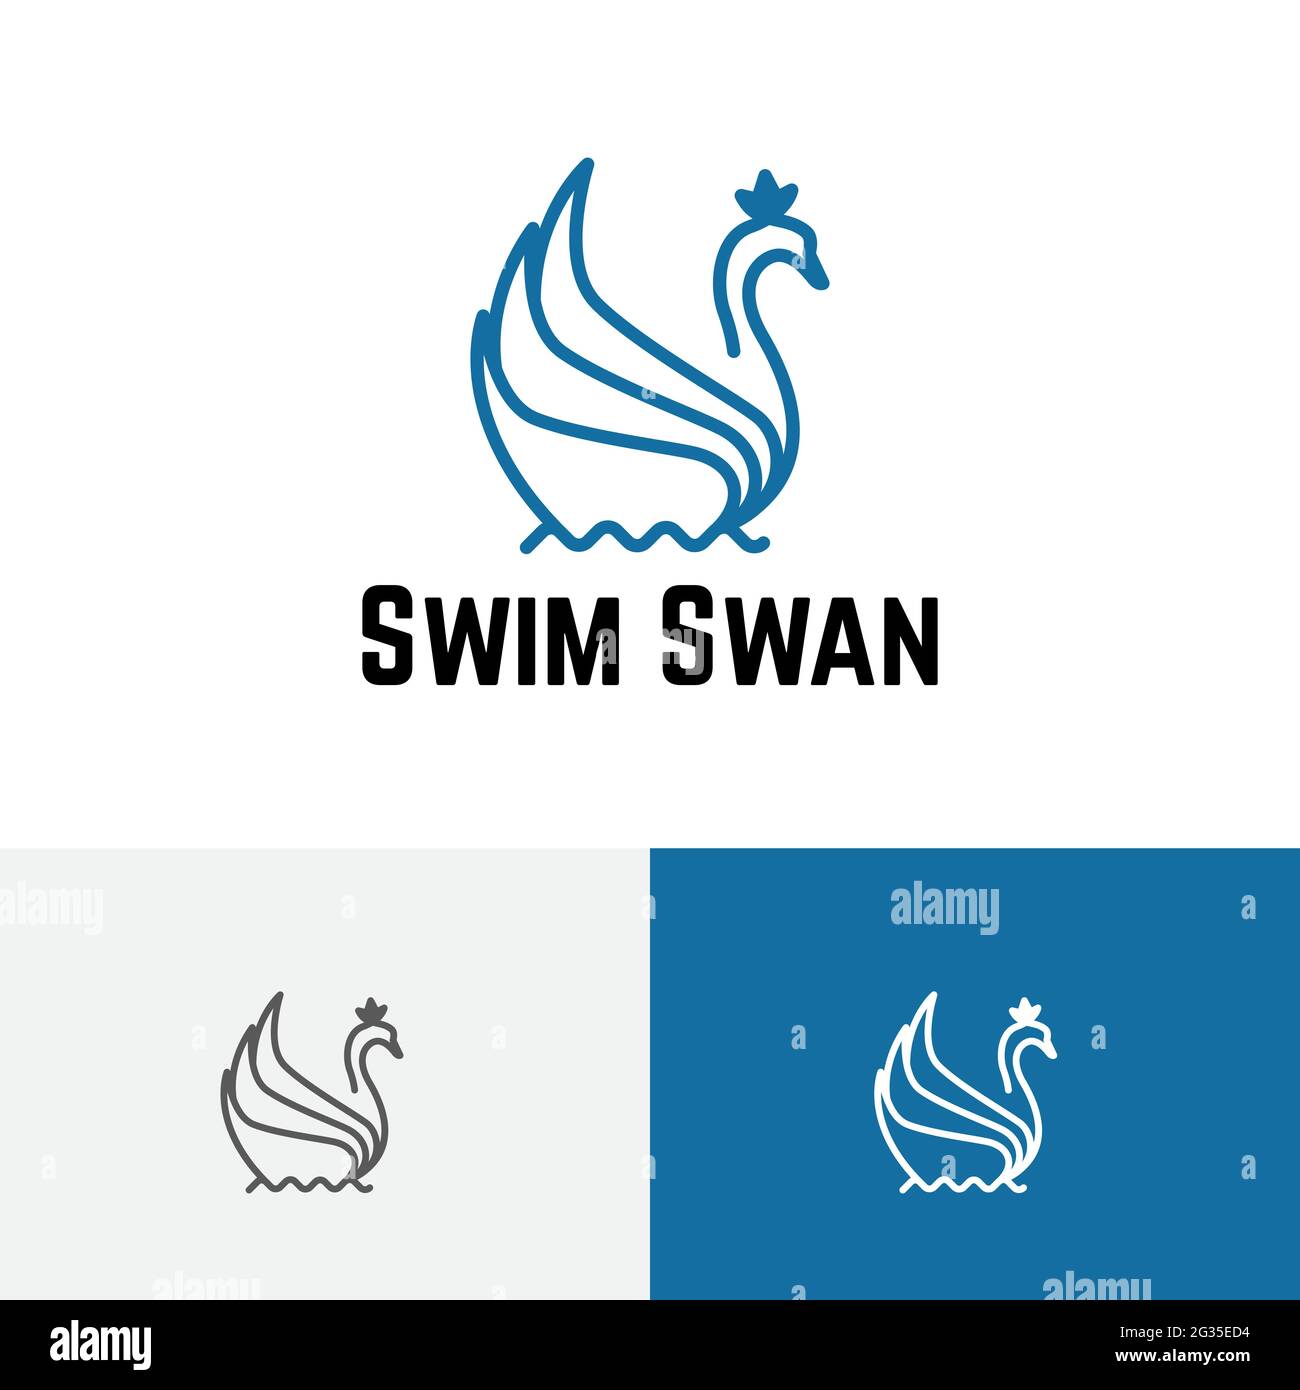 Swim Swan Crown Goose on Water Pool Line logo Illustrazione Vettoriale